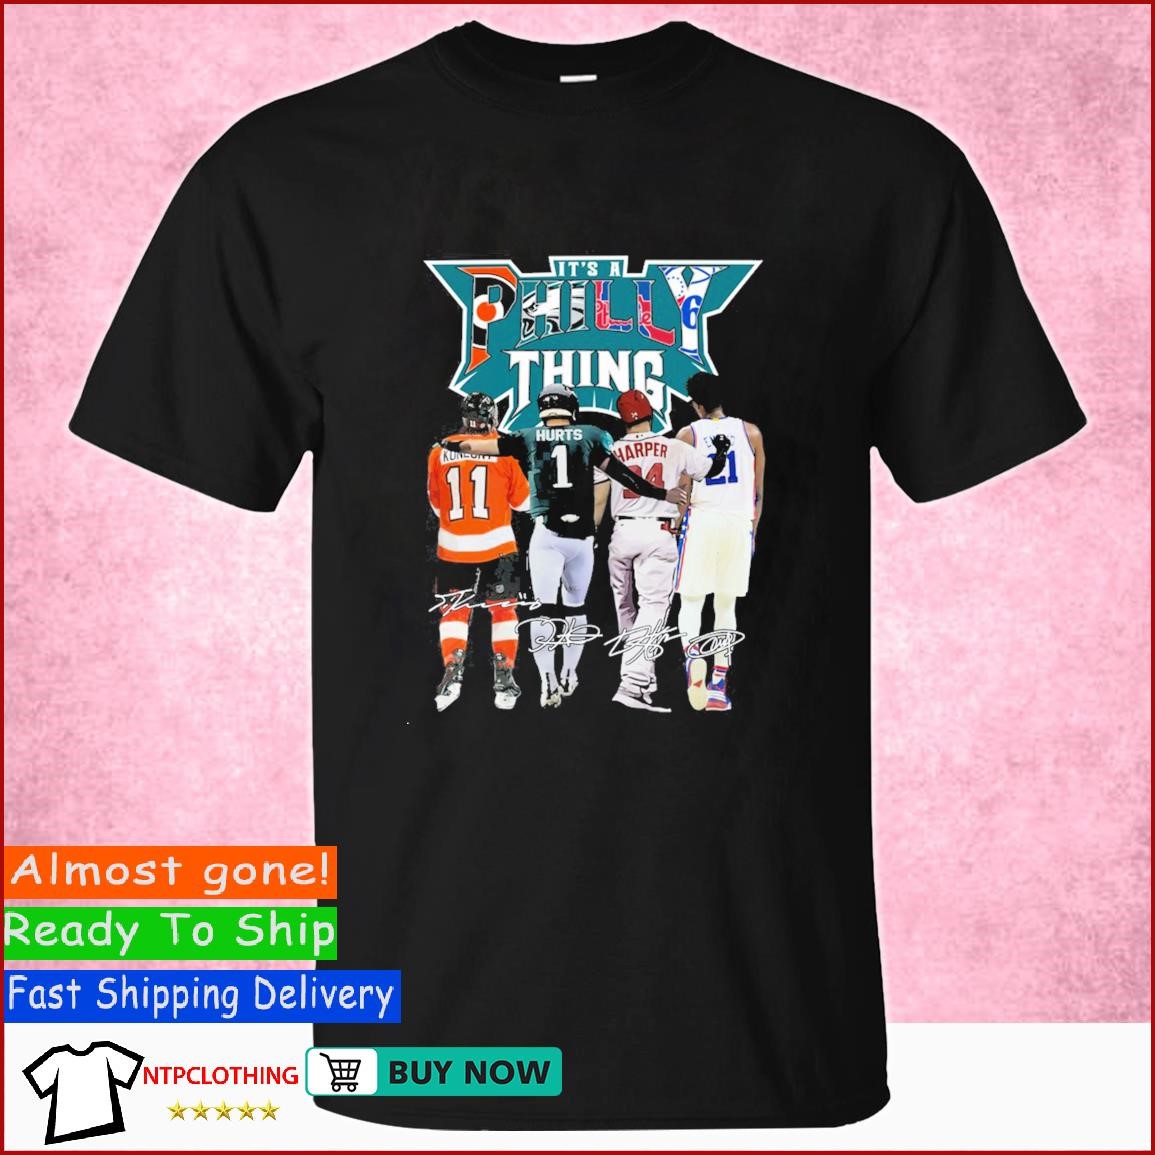 It's A Philly Thing Sweatshirt, Trending Football Unisex T-shirt Short  Sleeve